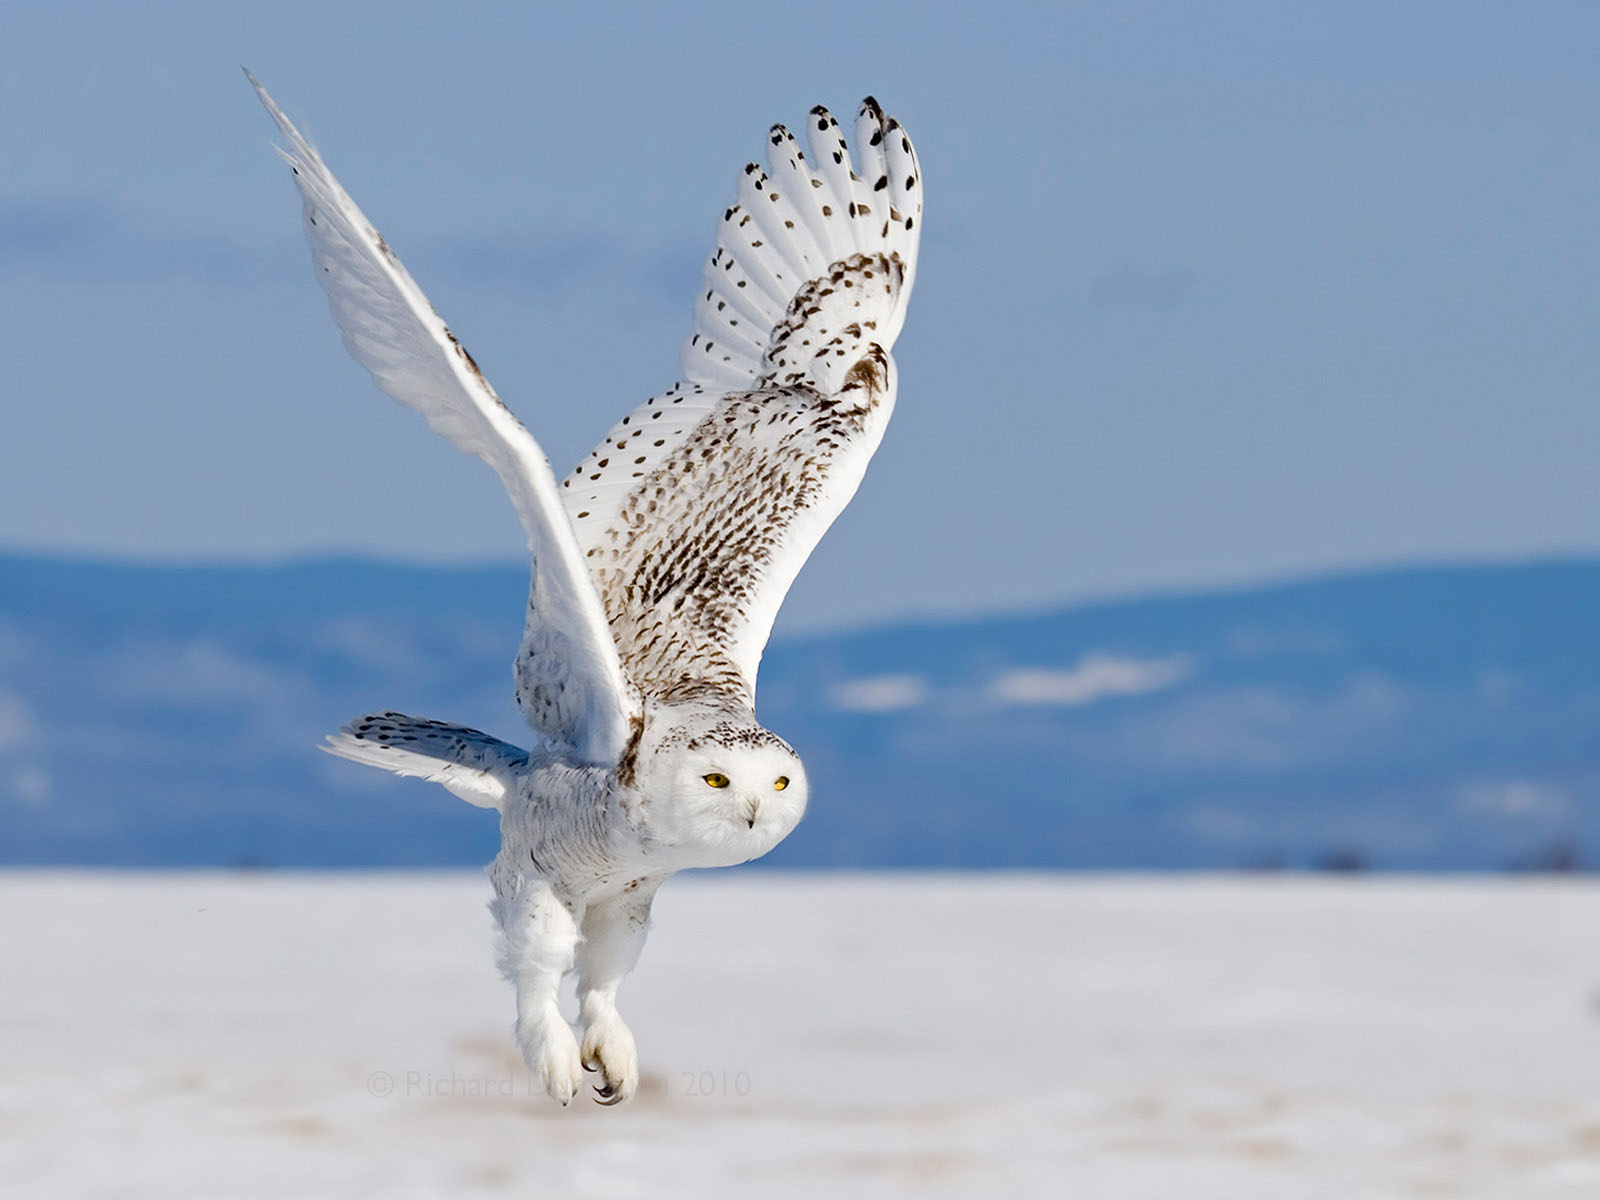 CUTE WILDLIFE: The Snowy Owl